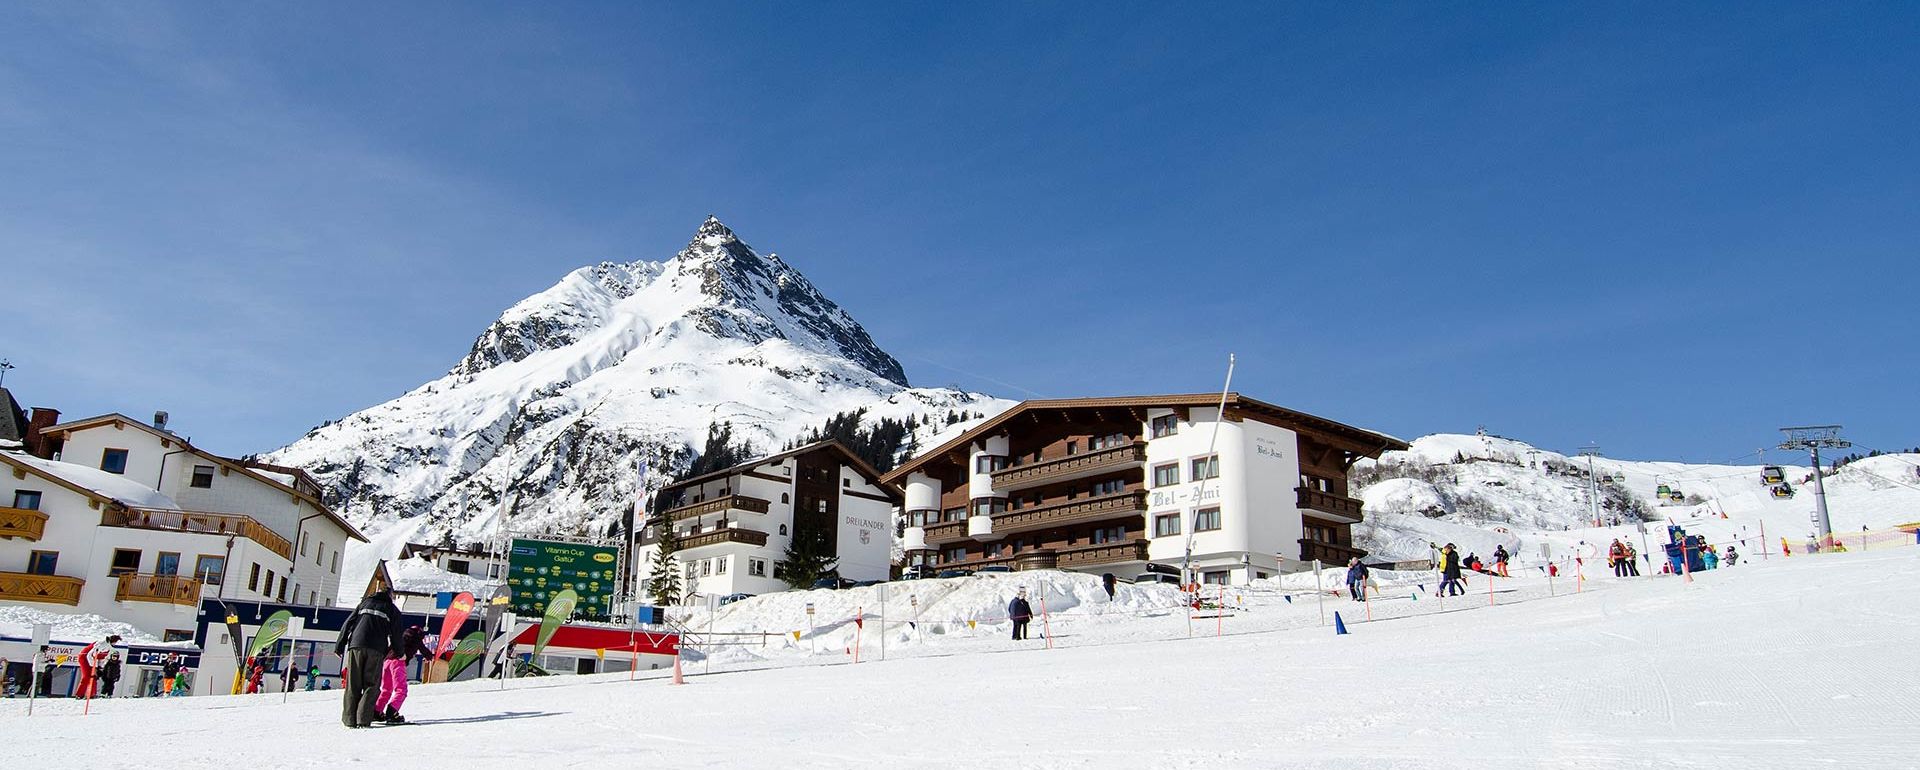 Hotel Garni Dreiländer in the middle of the skiing area 